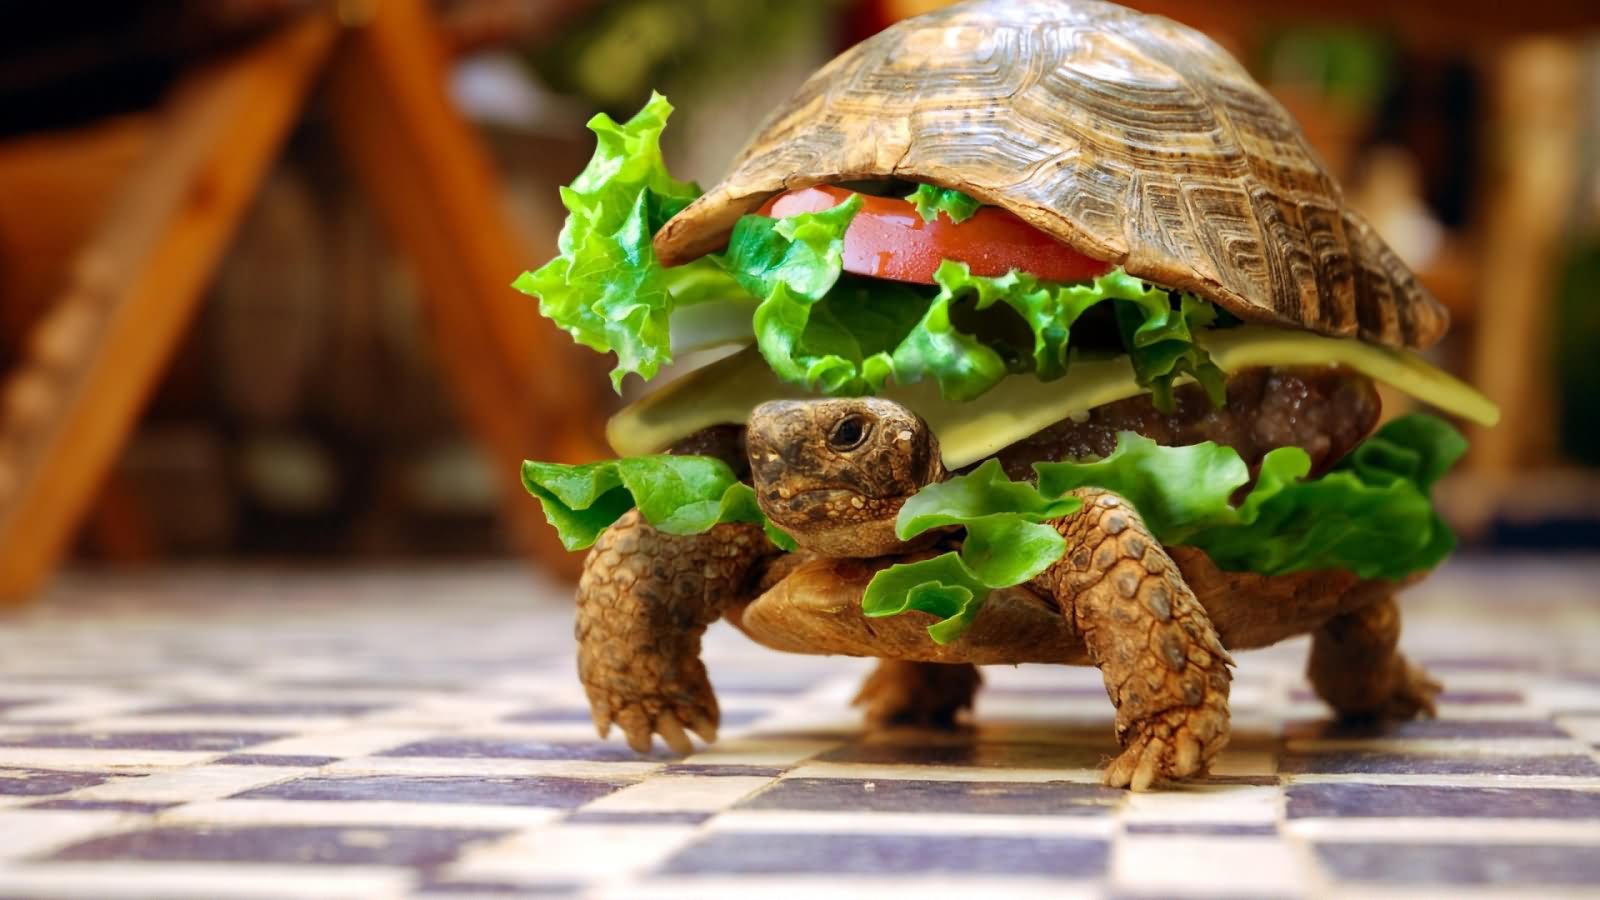 Turtle Funny Photoshopped Burger Photo For Whatsapp